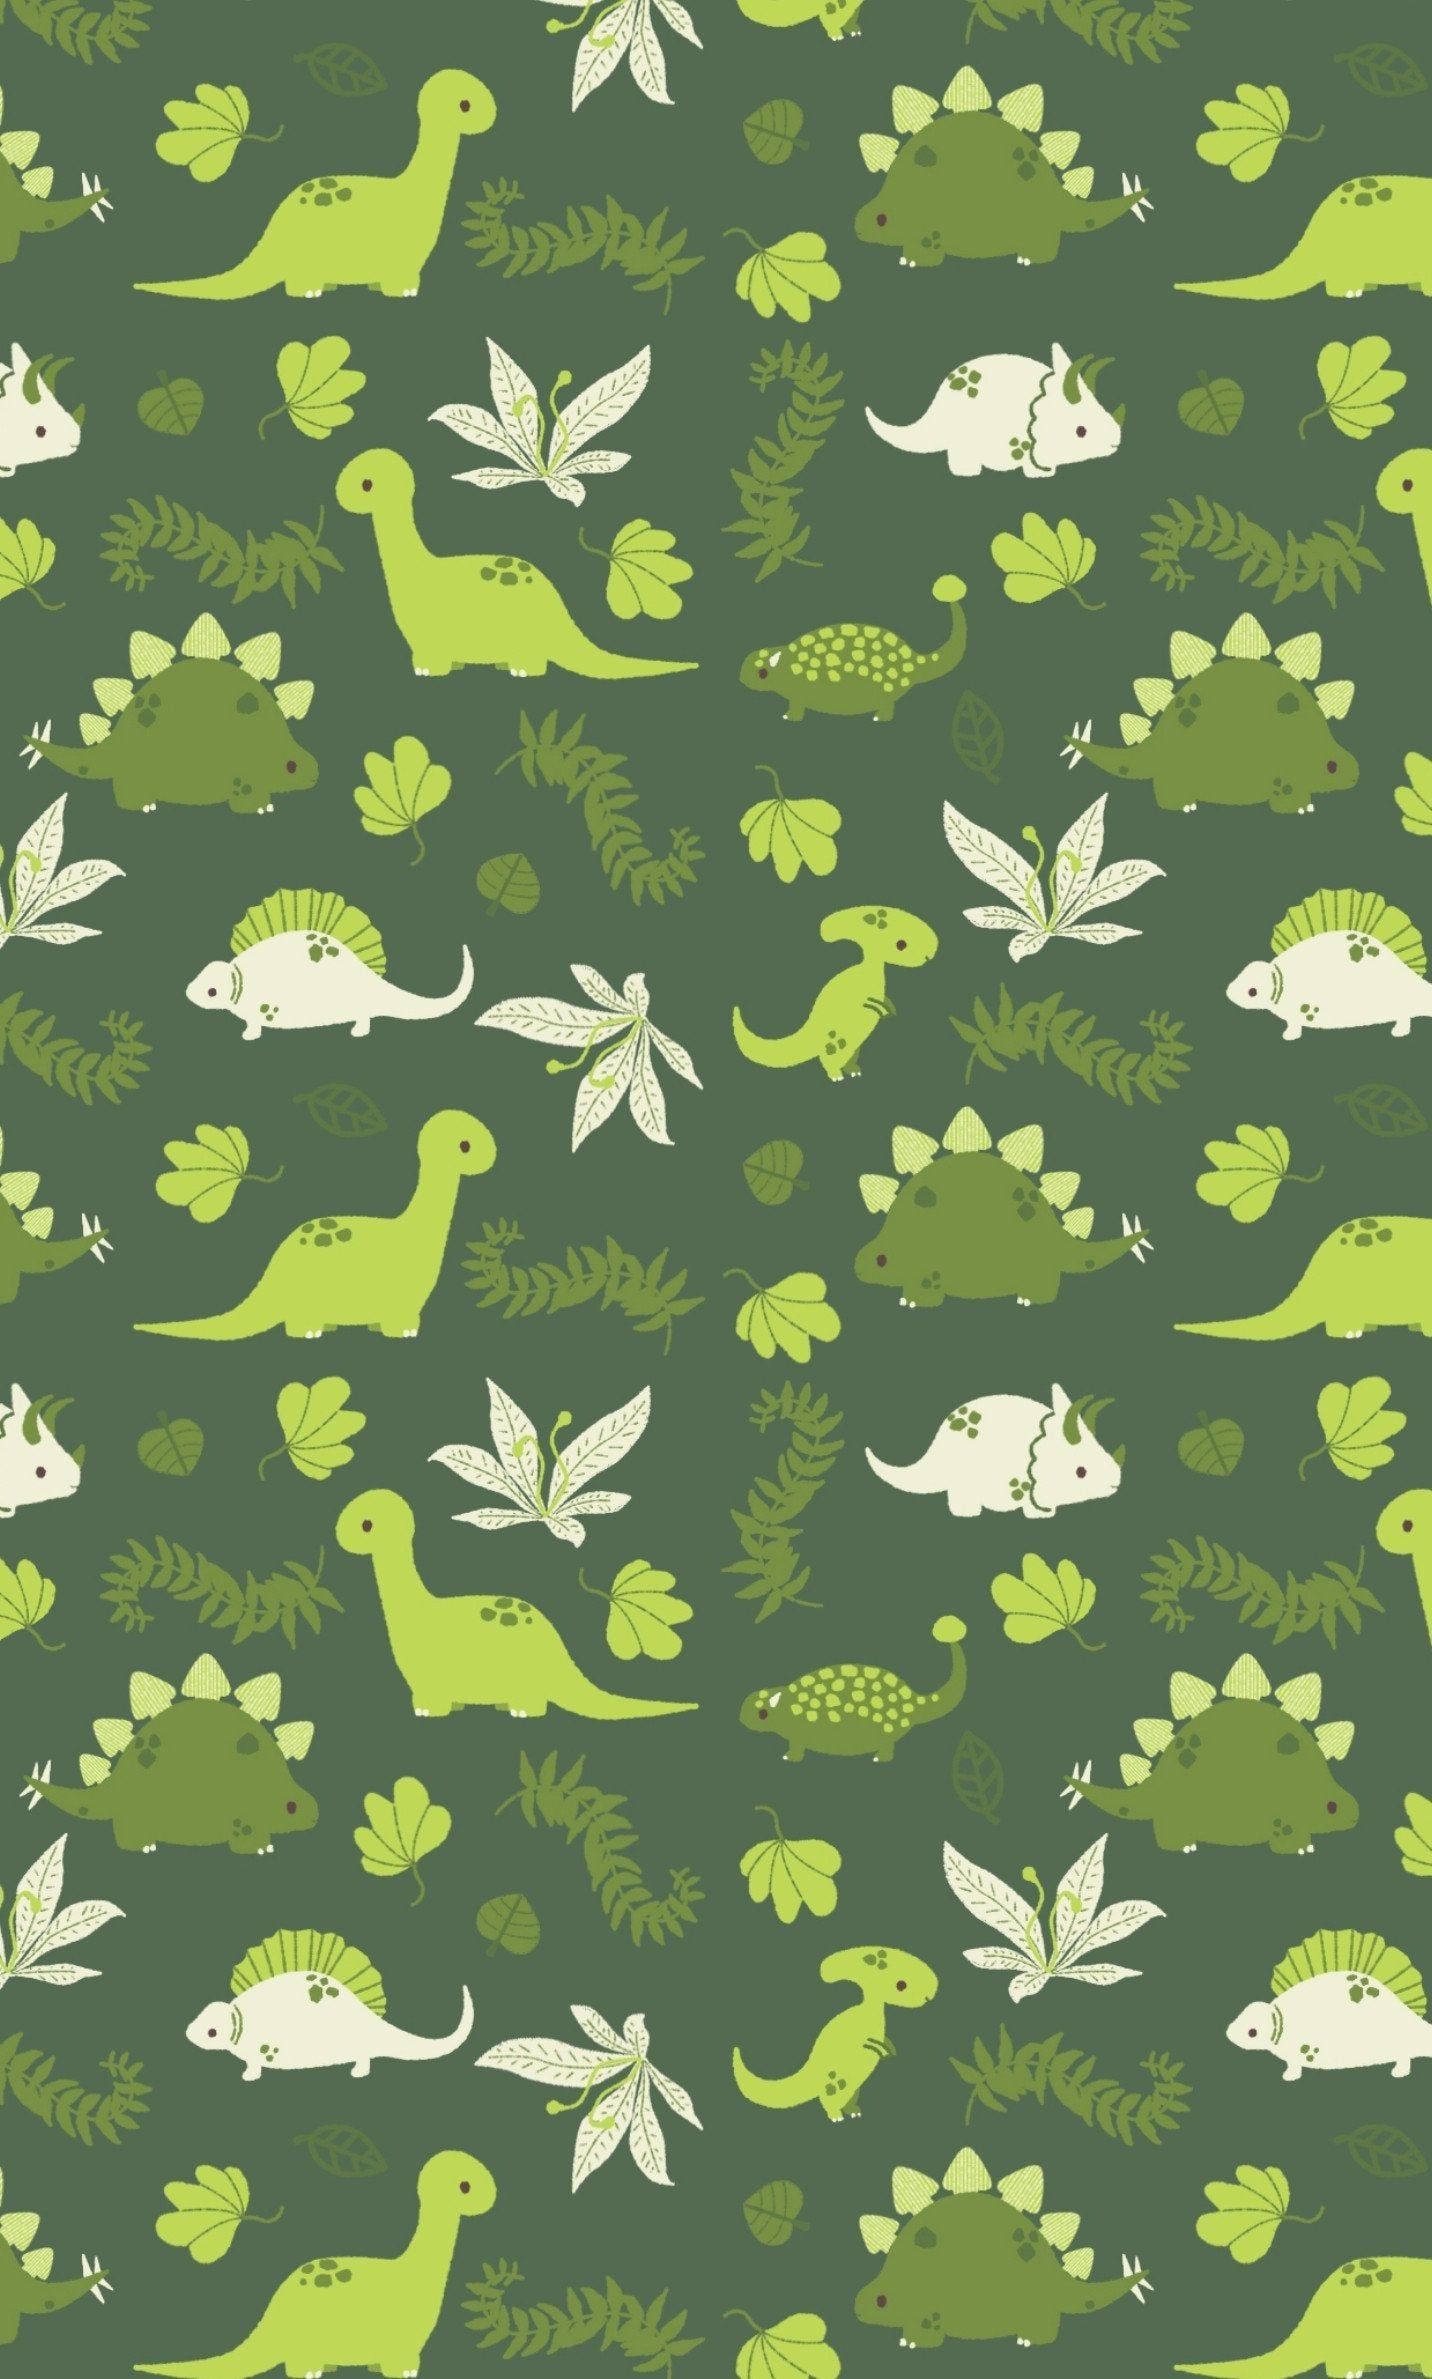 Cute Dinosaur Wallpaper Free HD Wallpaper. Dinosaur wallpaper, Cute wallpaper, Pretty wallpaper